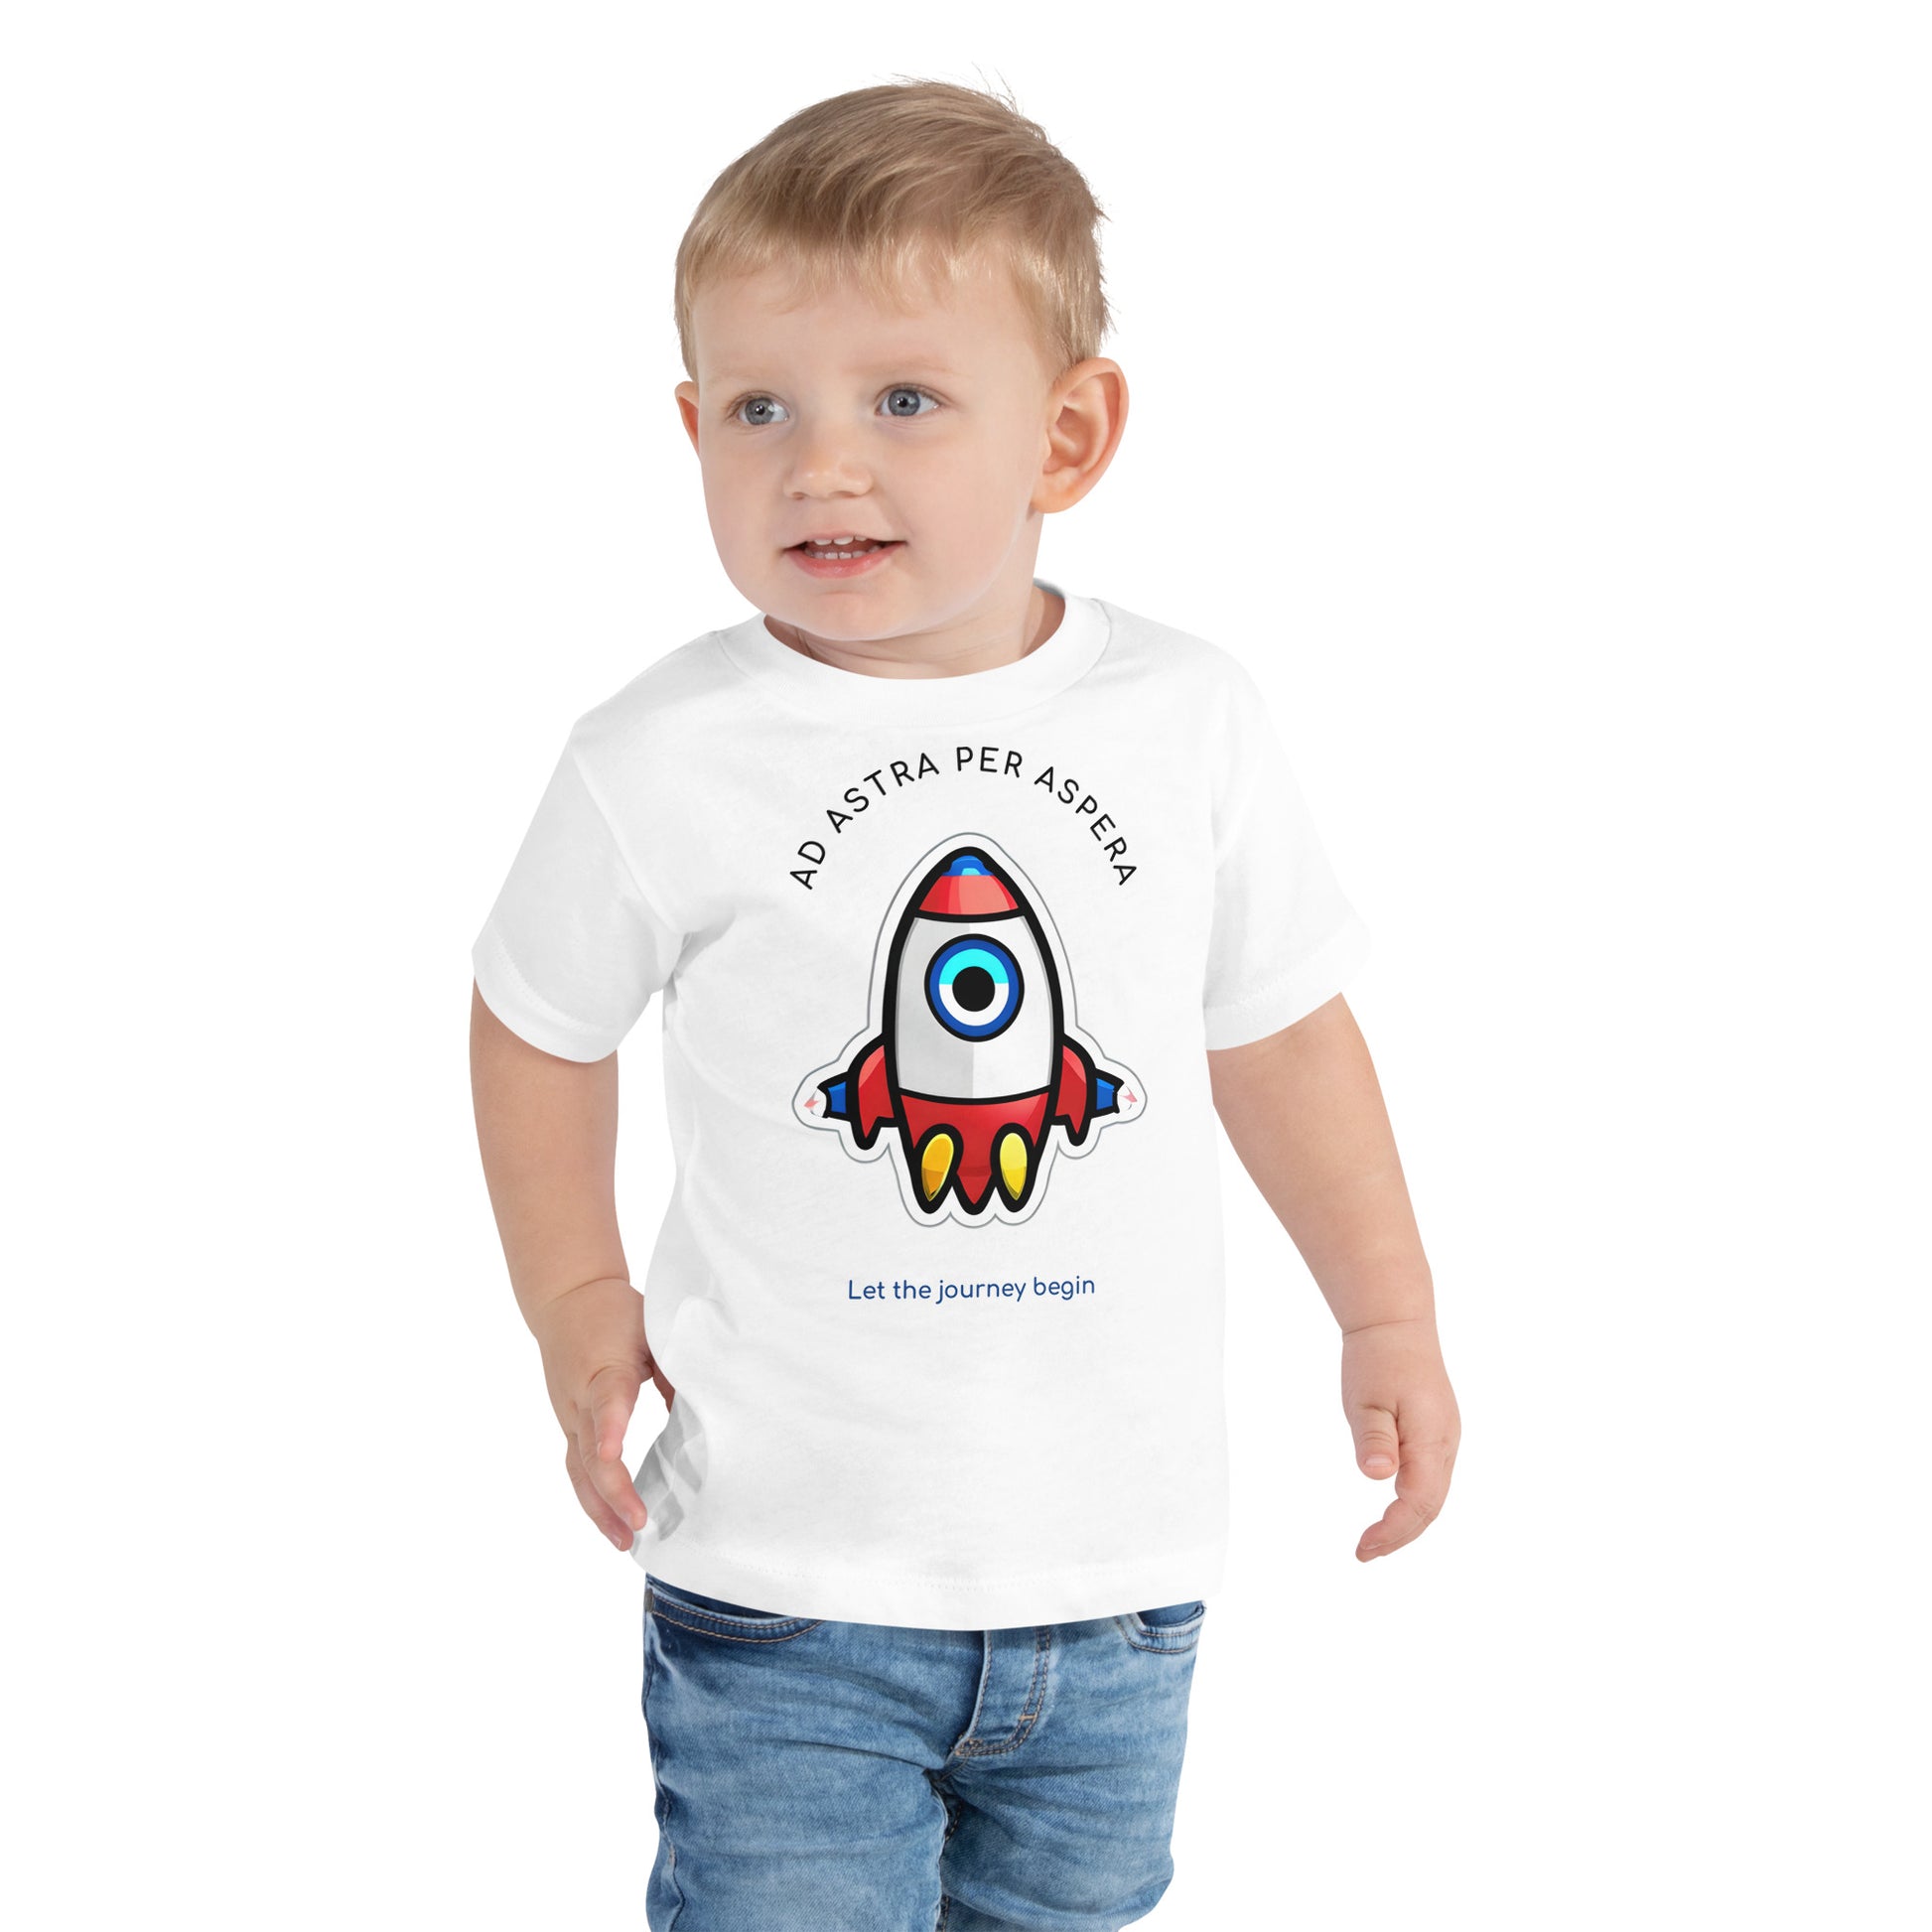 preschool boy wearing white rocketship shirt